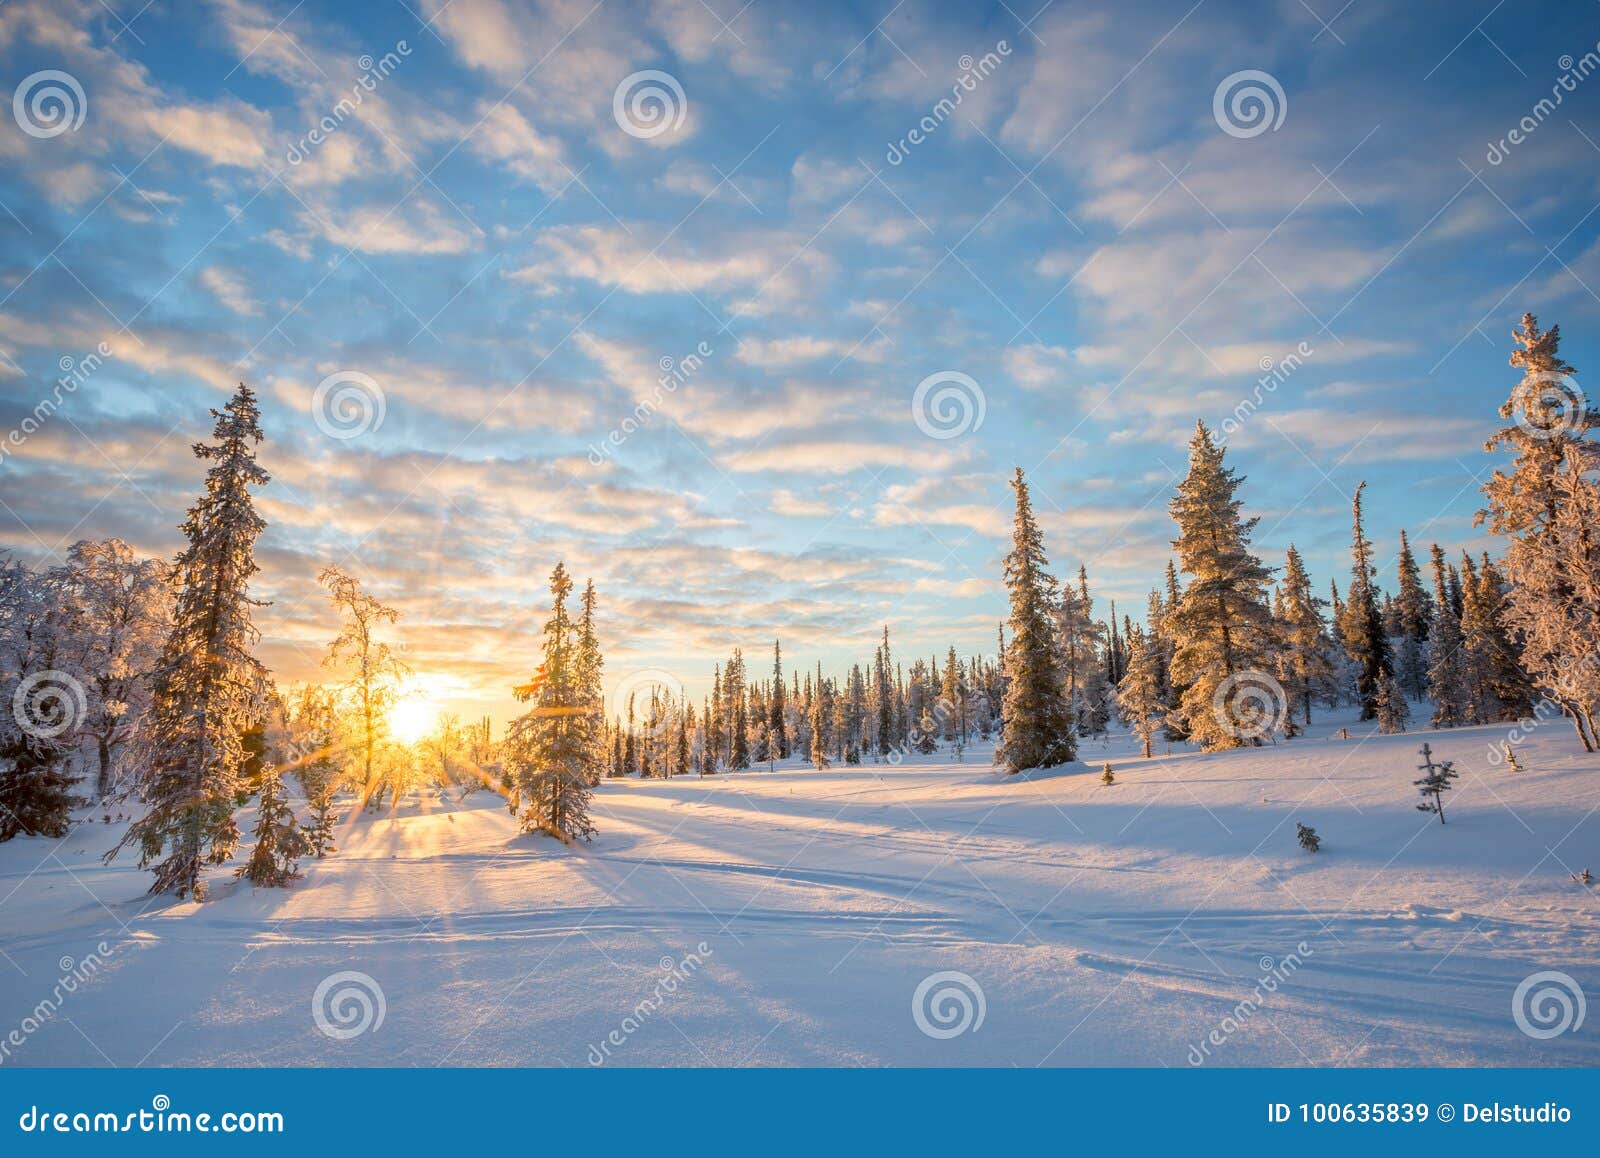 snowy landscape at sunset, frozen trees in winter in saariselka, lapland finland